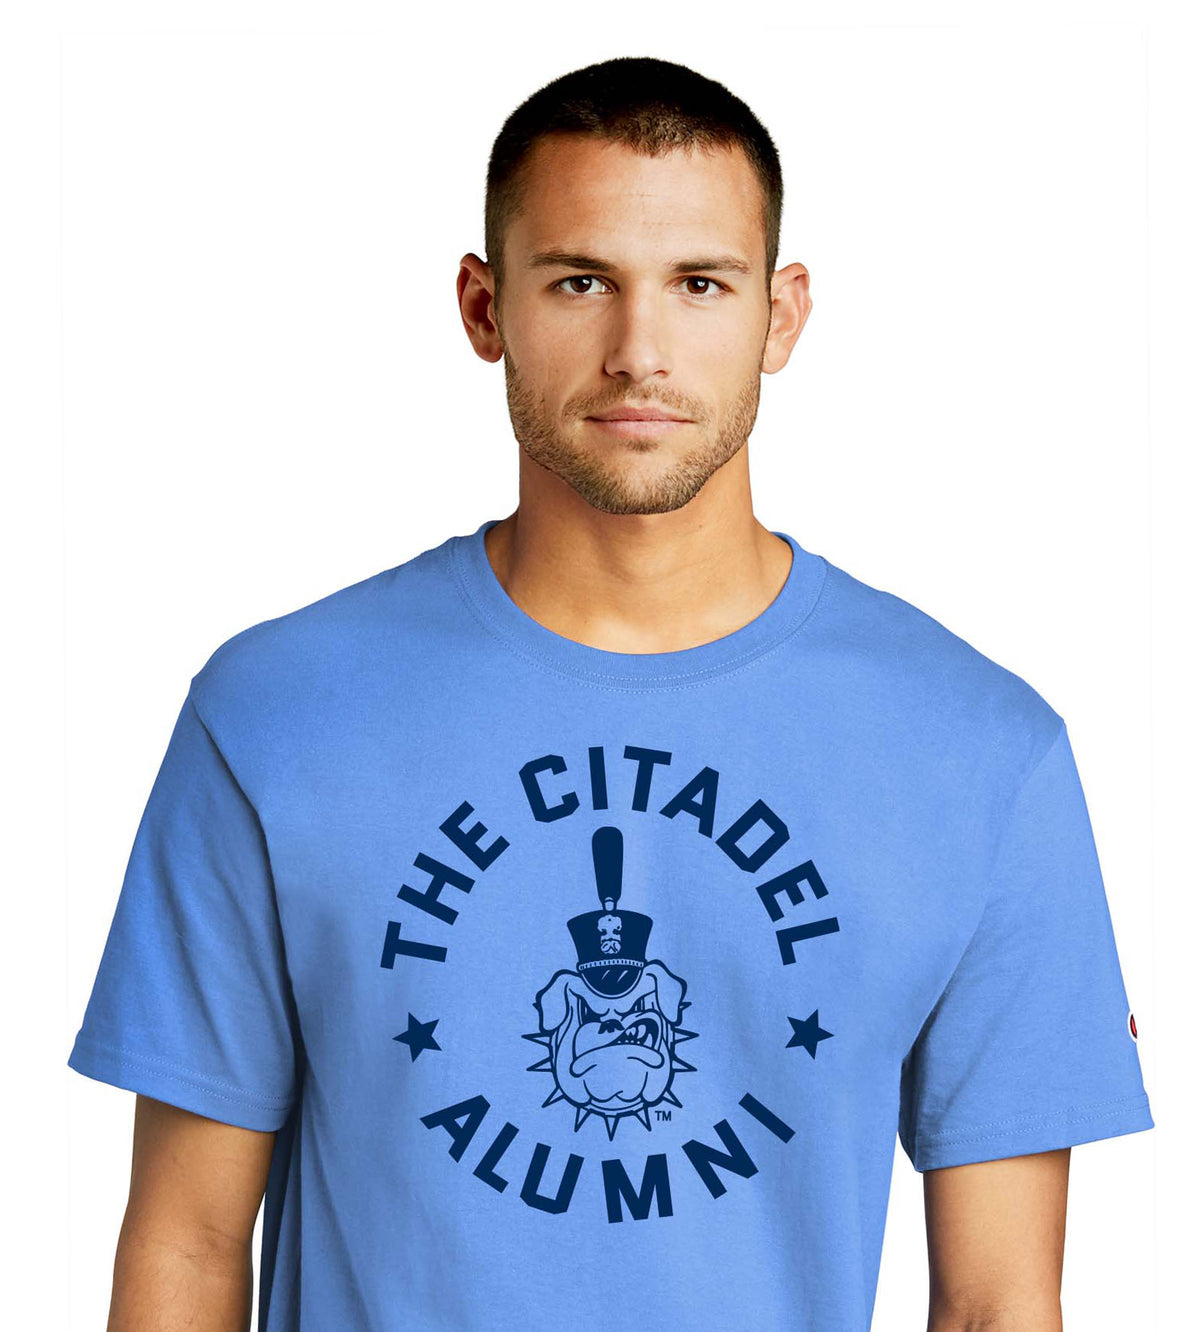 The Citadel Spike Alumni and Stars Champion Jersey Tee. Light Blue